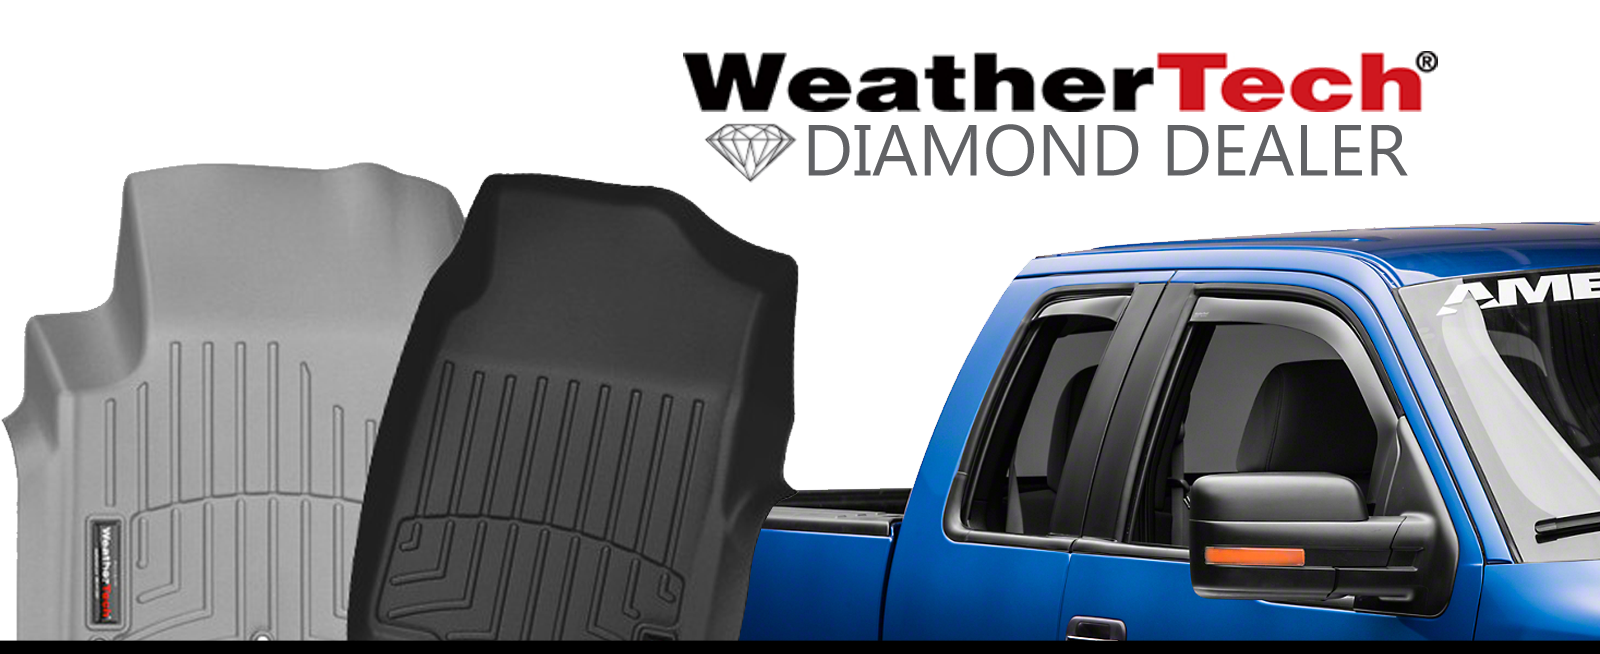 WeatherTech Diamond Dealer